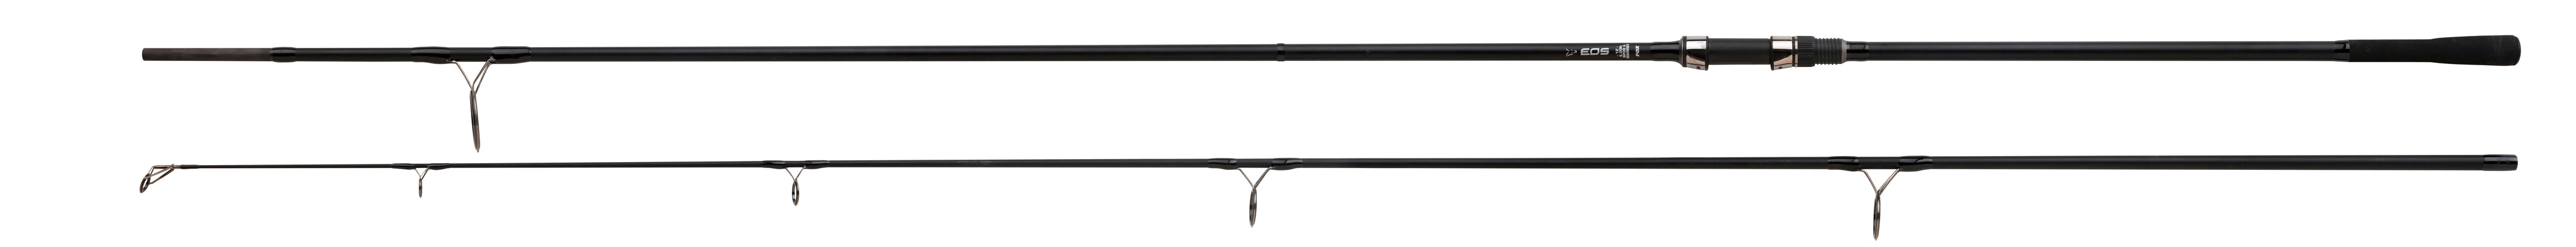 CRD296 Fox EOS Spod & Marker Rod 12ft 5lb NEW Fishing Spod/Maker Rod 